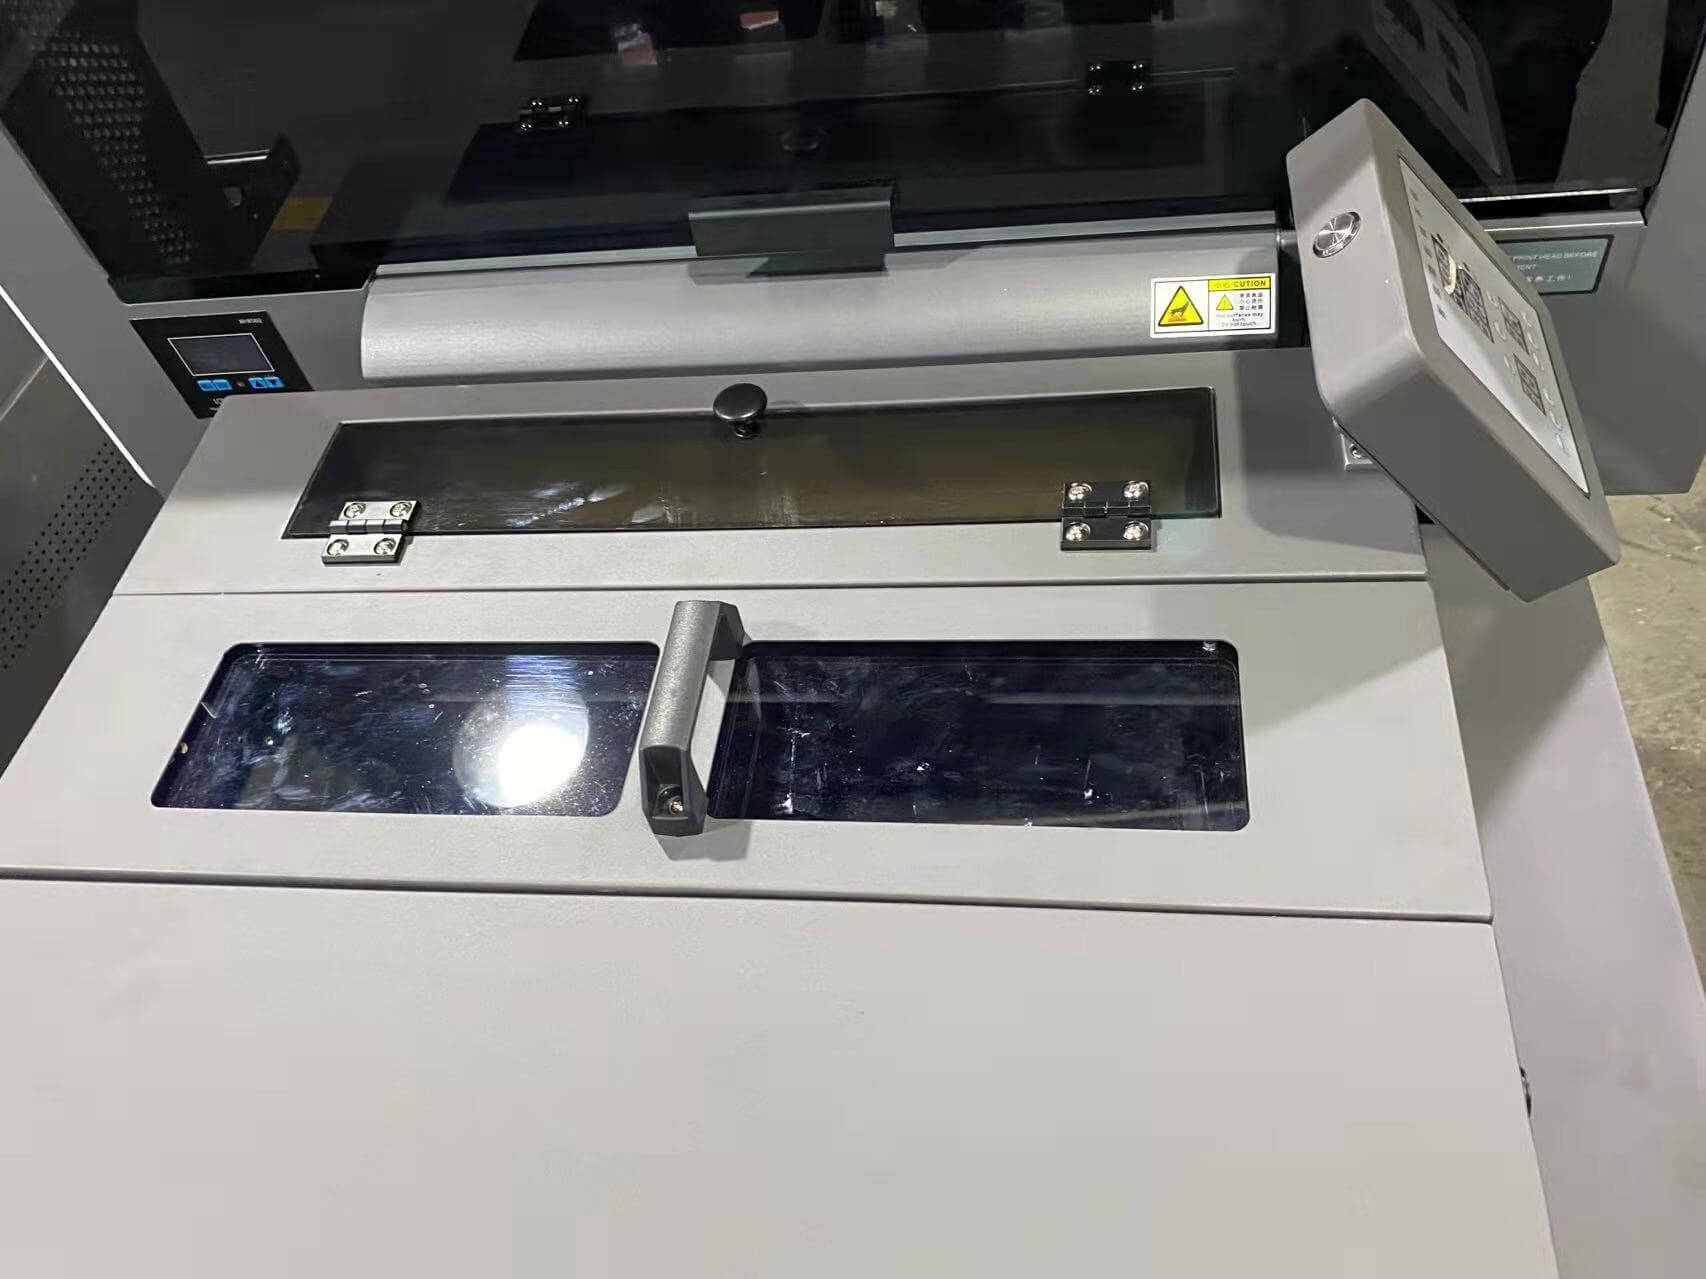 sen-331-DTF-printer-1-hanrun-paper